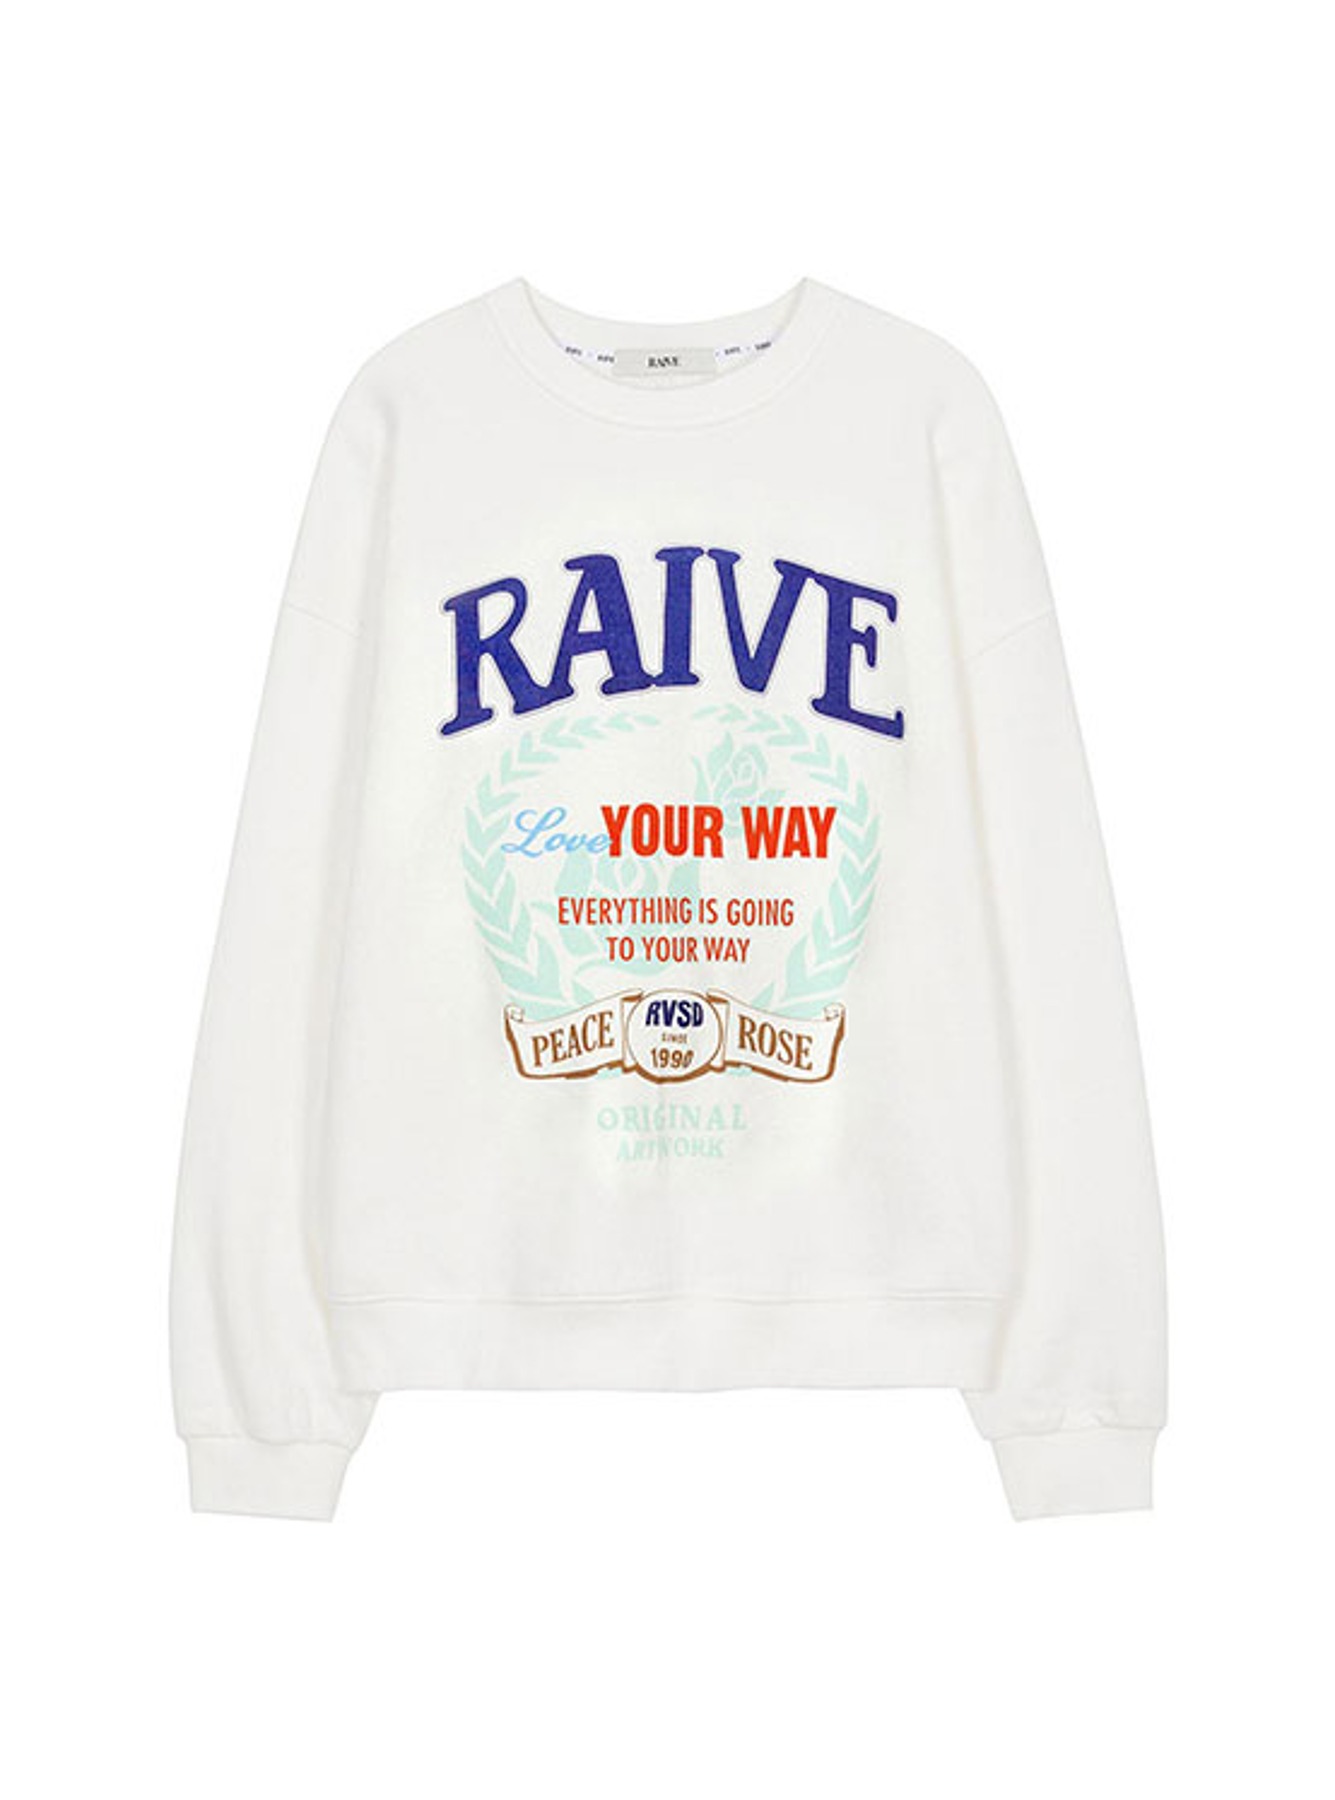 RAIVE Artwork Sweatshirt in White VW3SE253-01